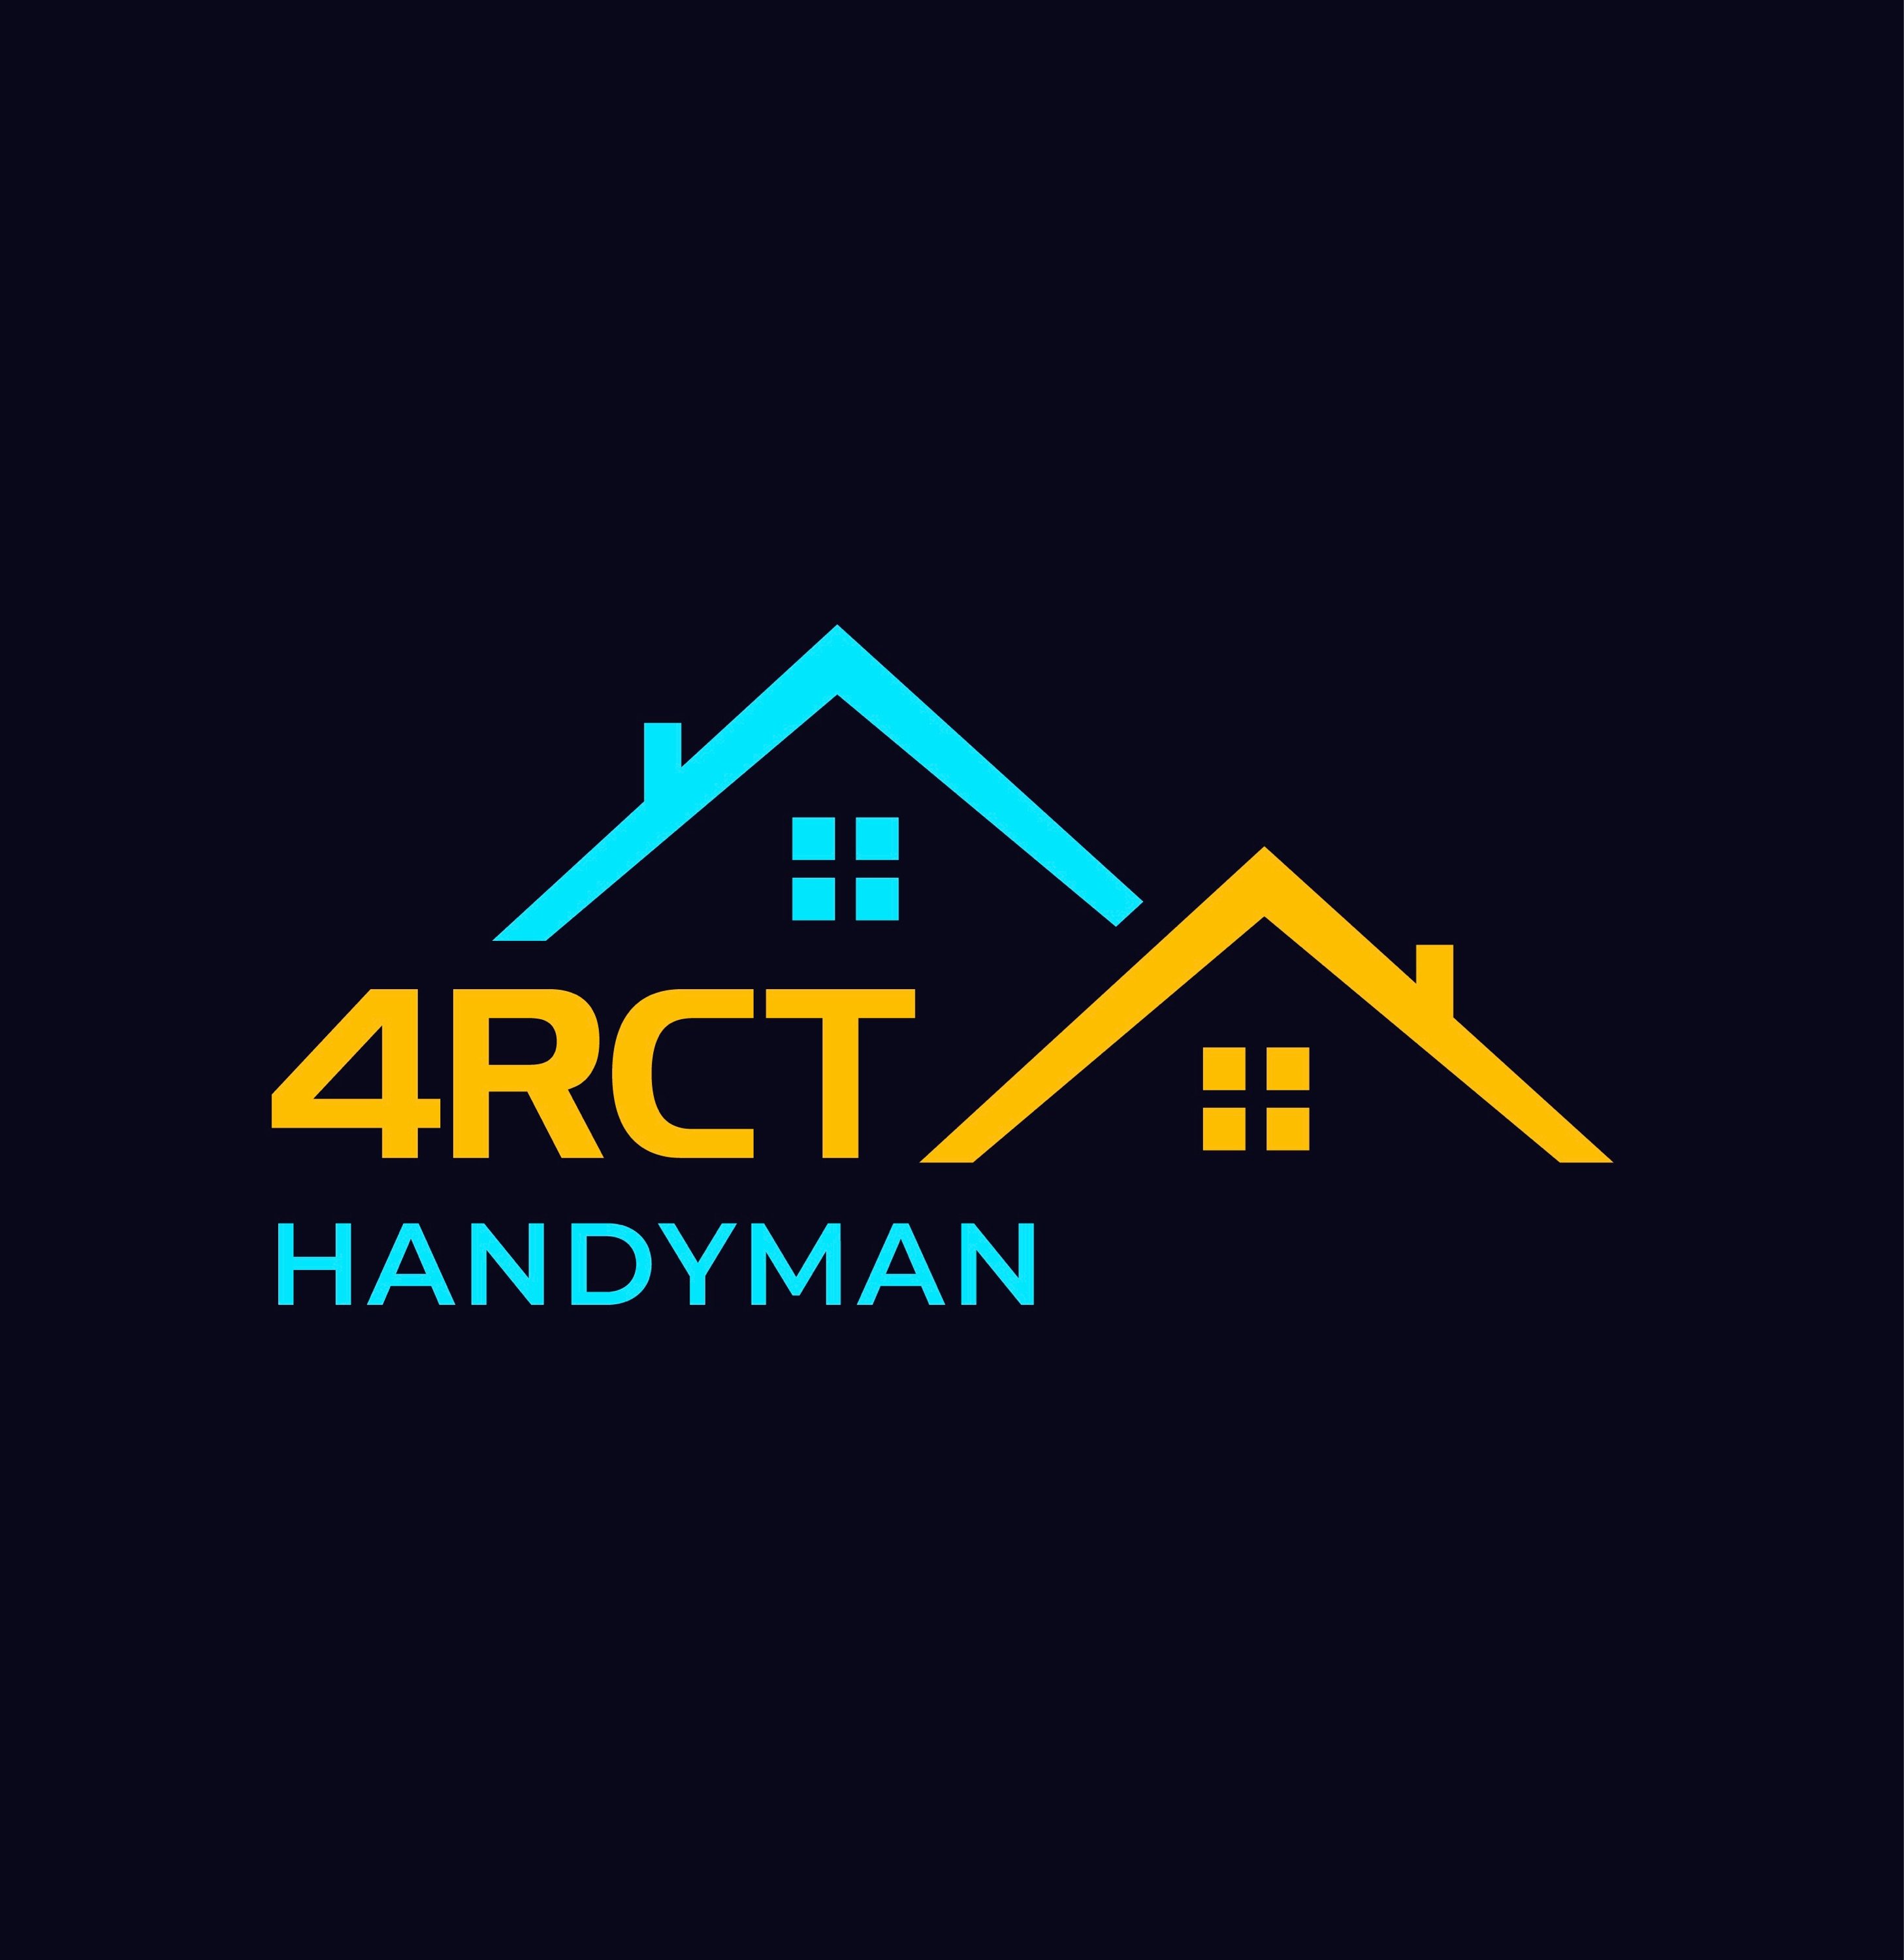 4RCT Handyman-Unlicensed Contractor Logo